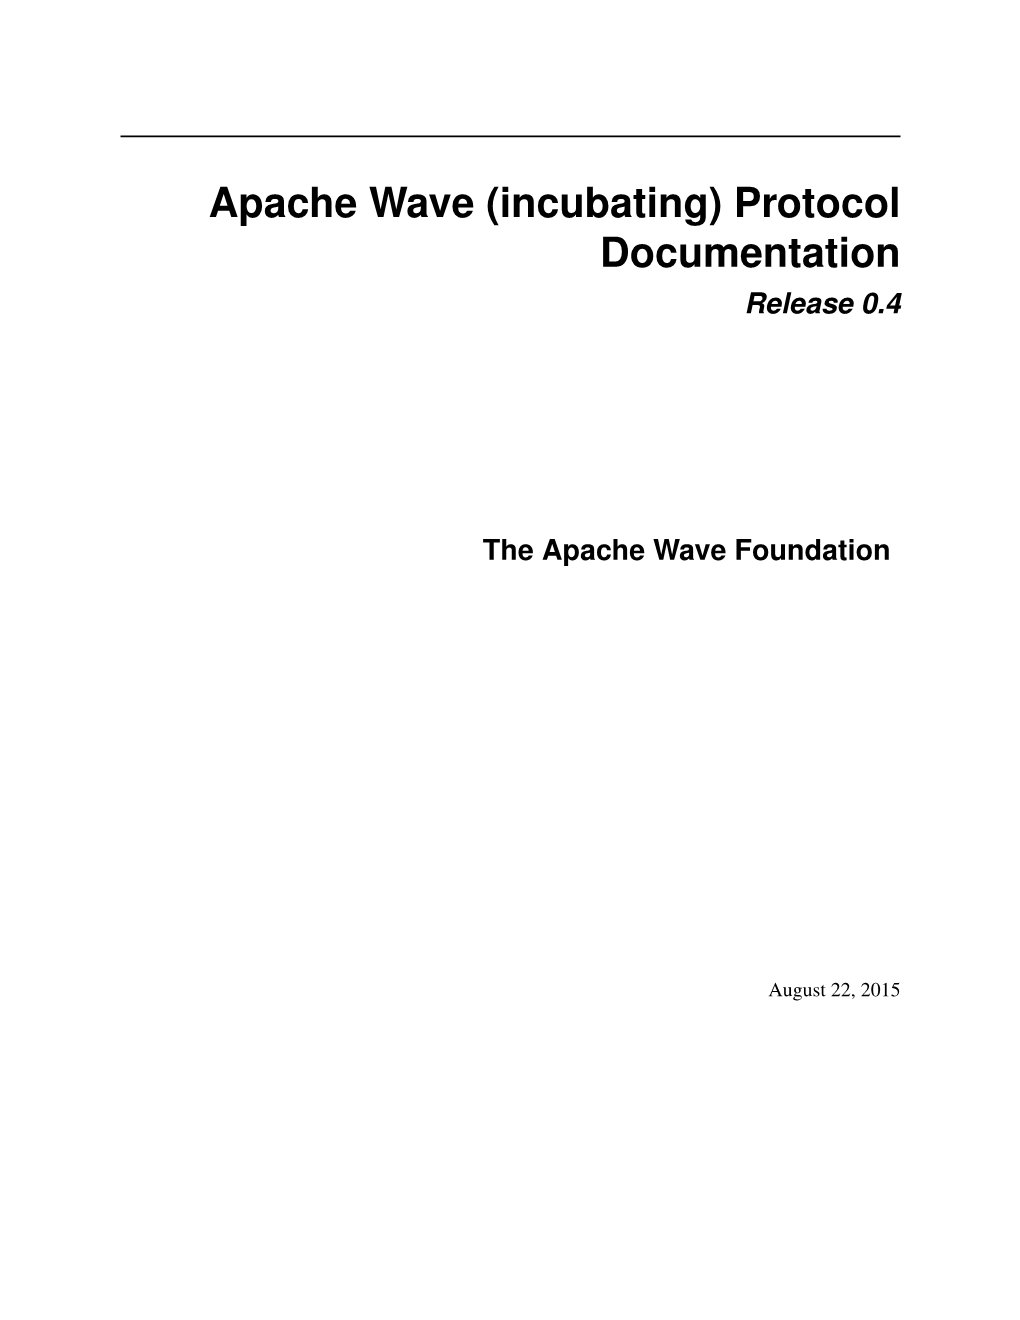 Apache Wave (Incubating) Protocol Documentation Release 0.4